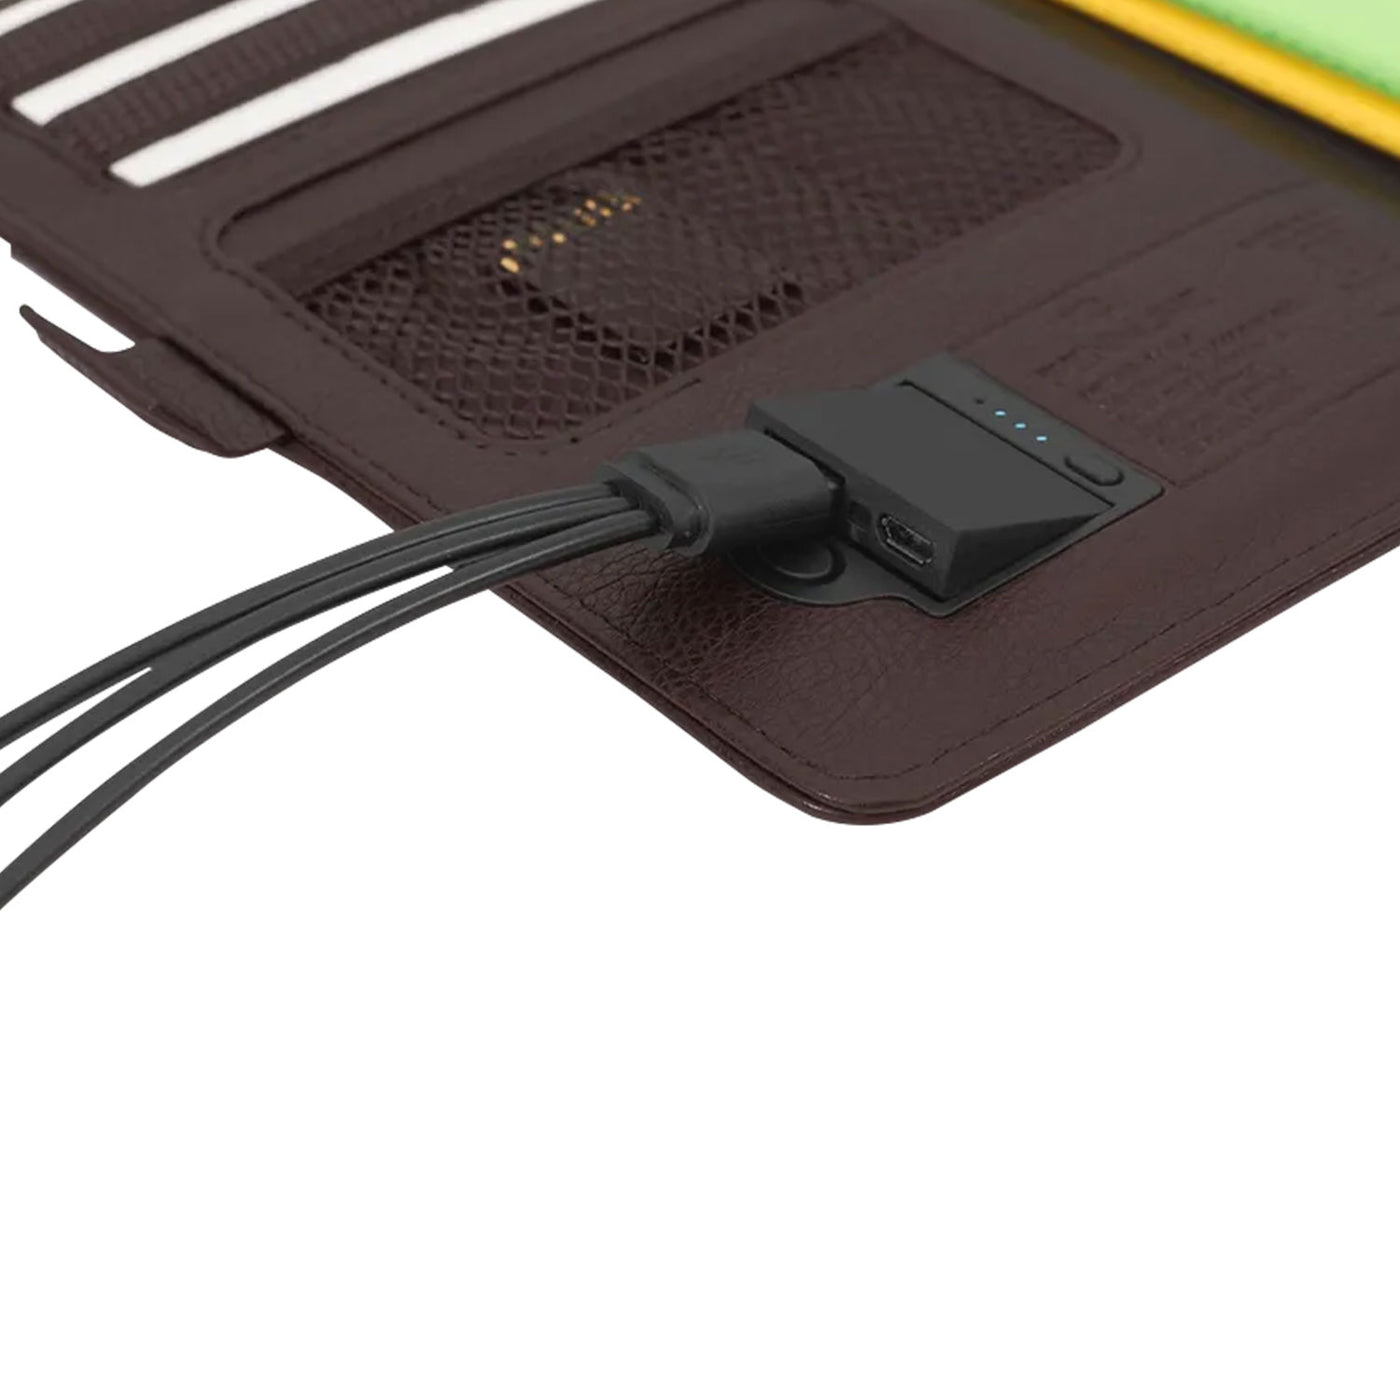 Pennline Superbook Mini Organiser with Wireless Charging and 4000 mAh Powerbank - Coffee Brown 5